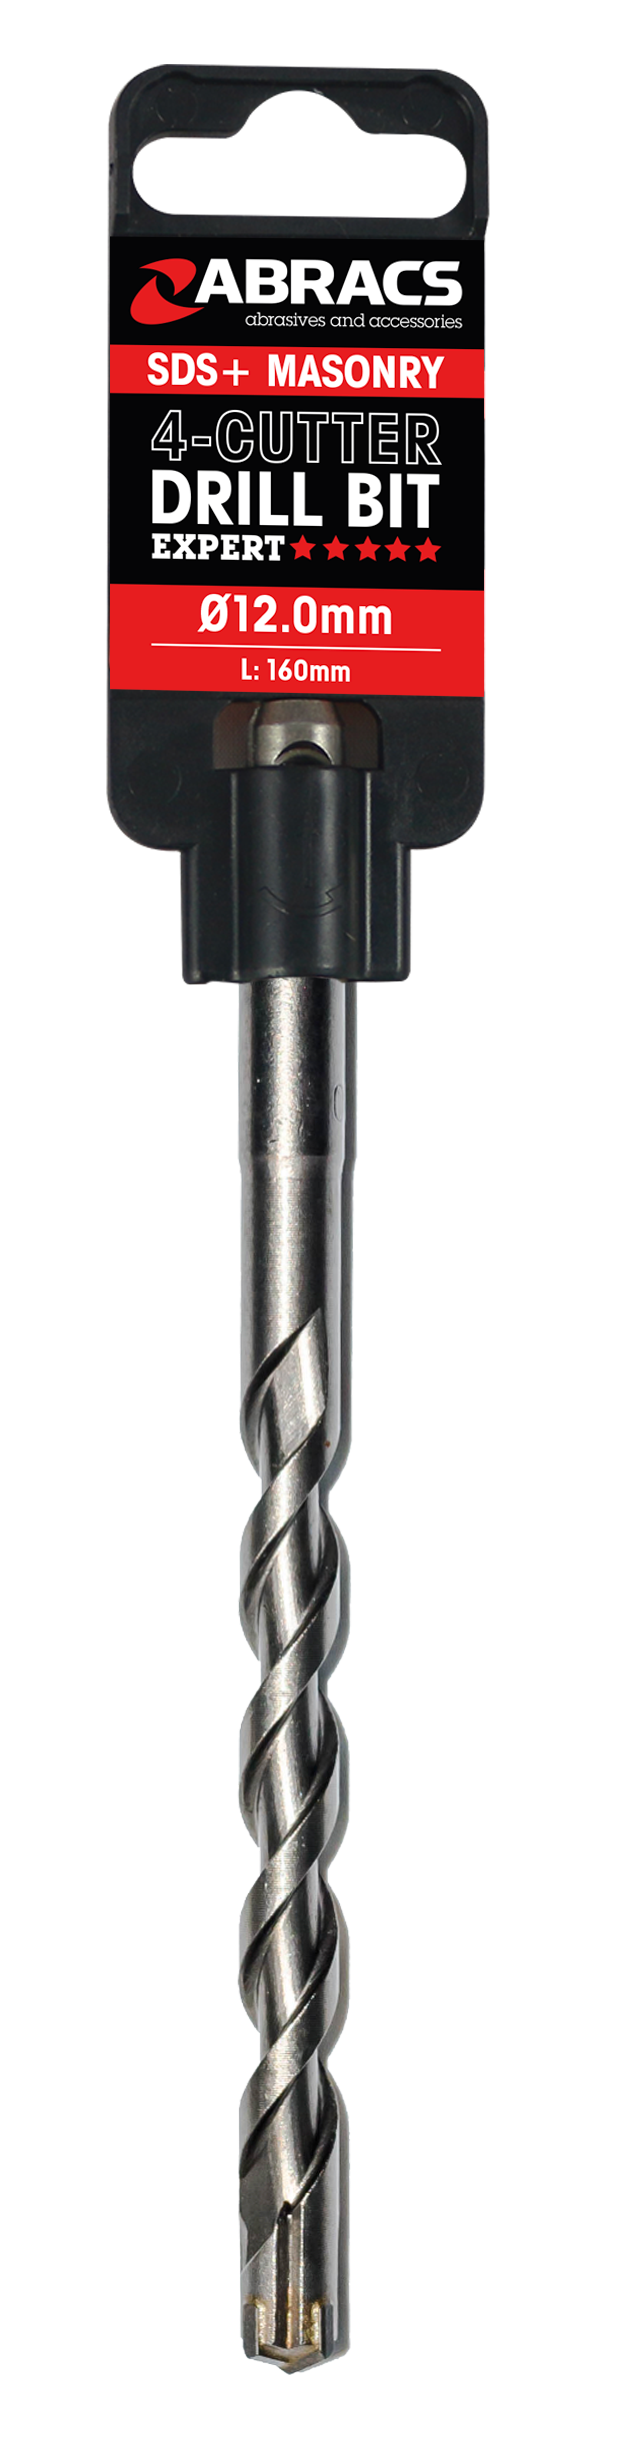 DBCX200310 20.0mm x 310mm SDS+ Masonry Drill Bit - 4 Cutter